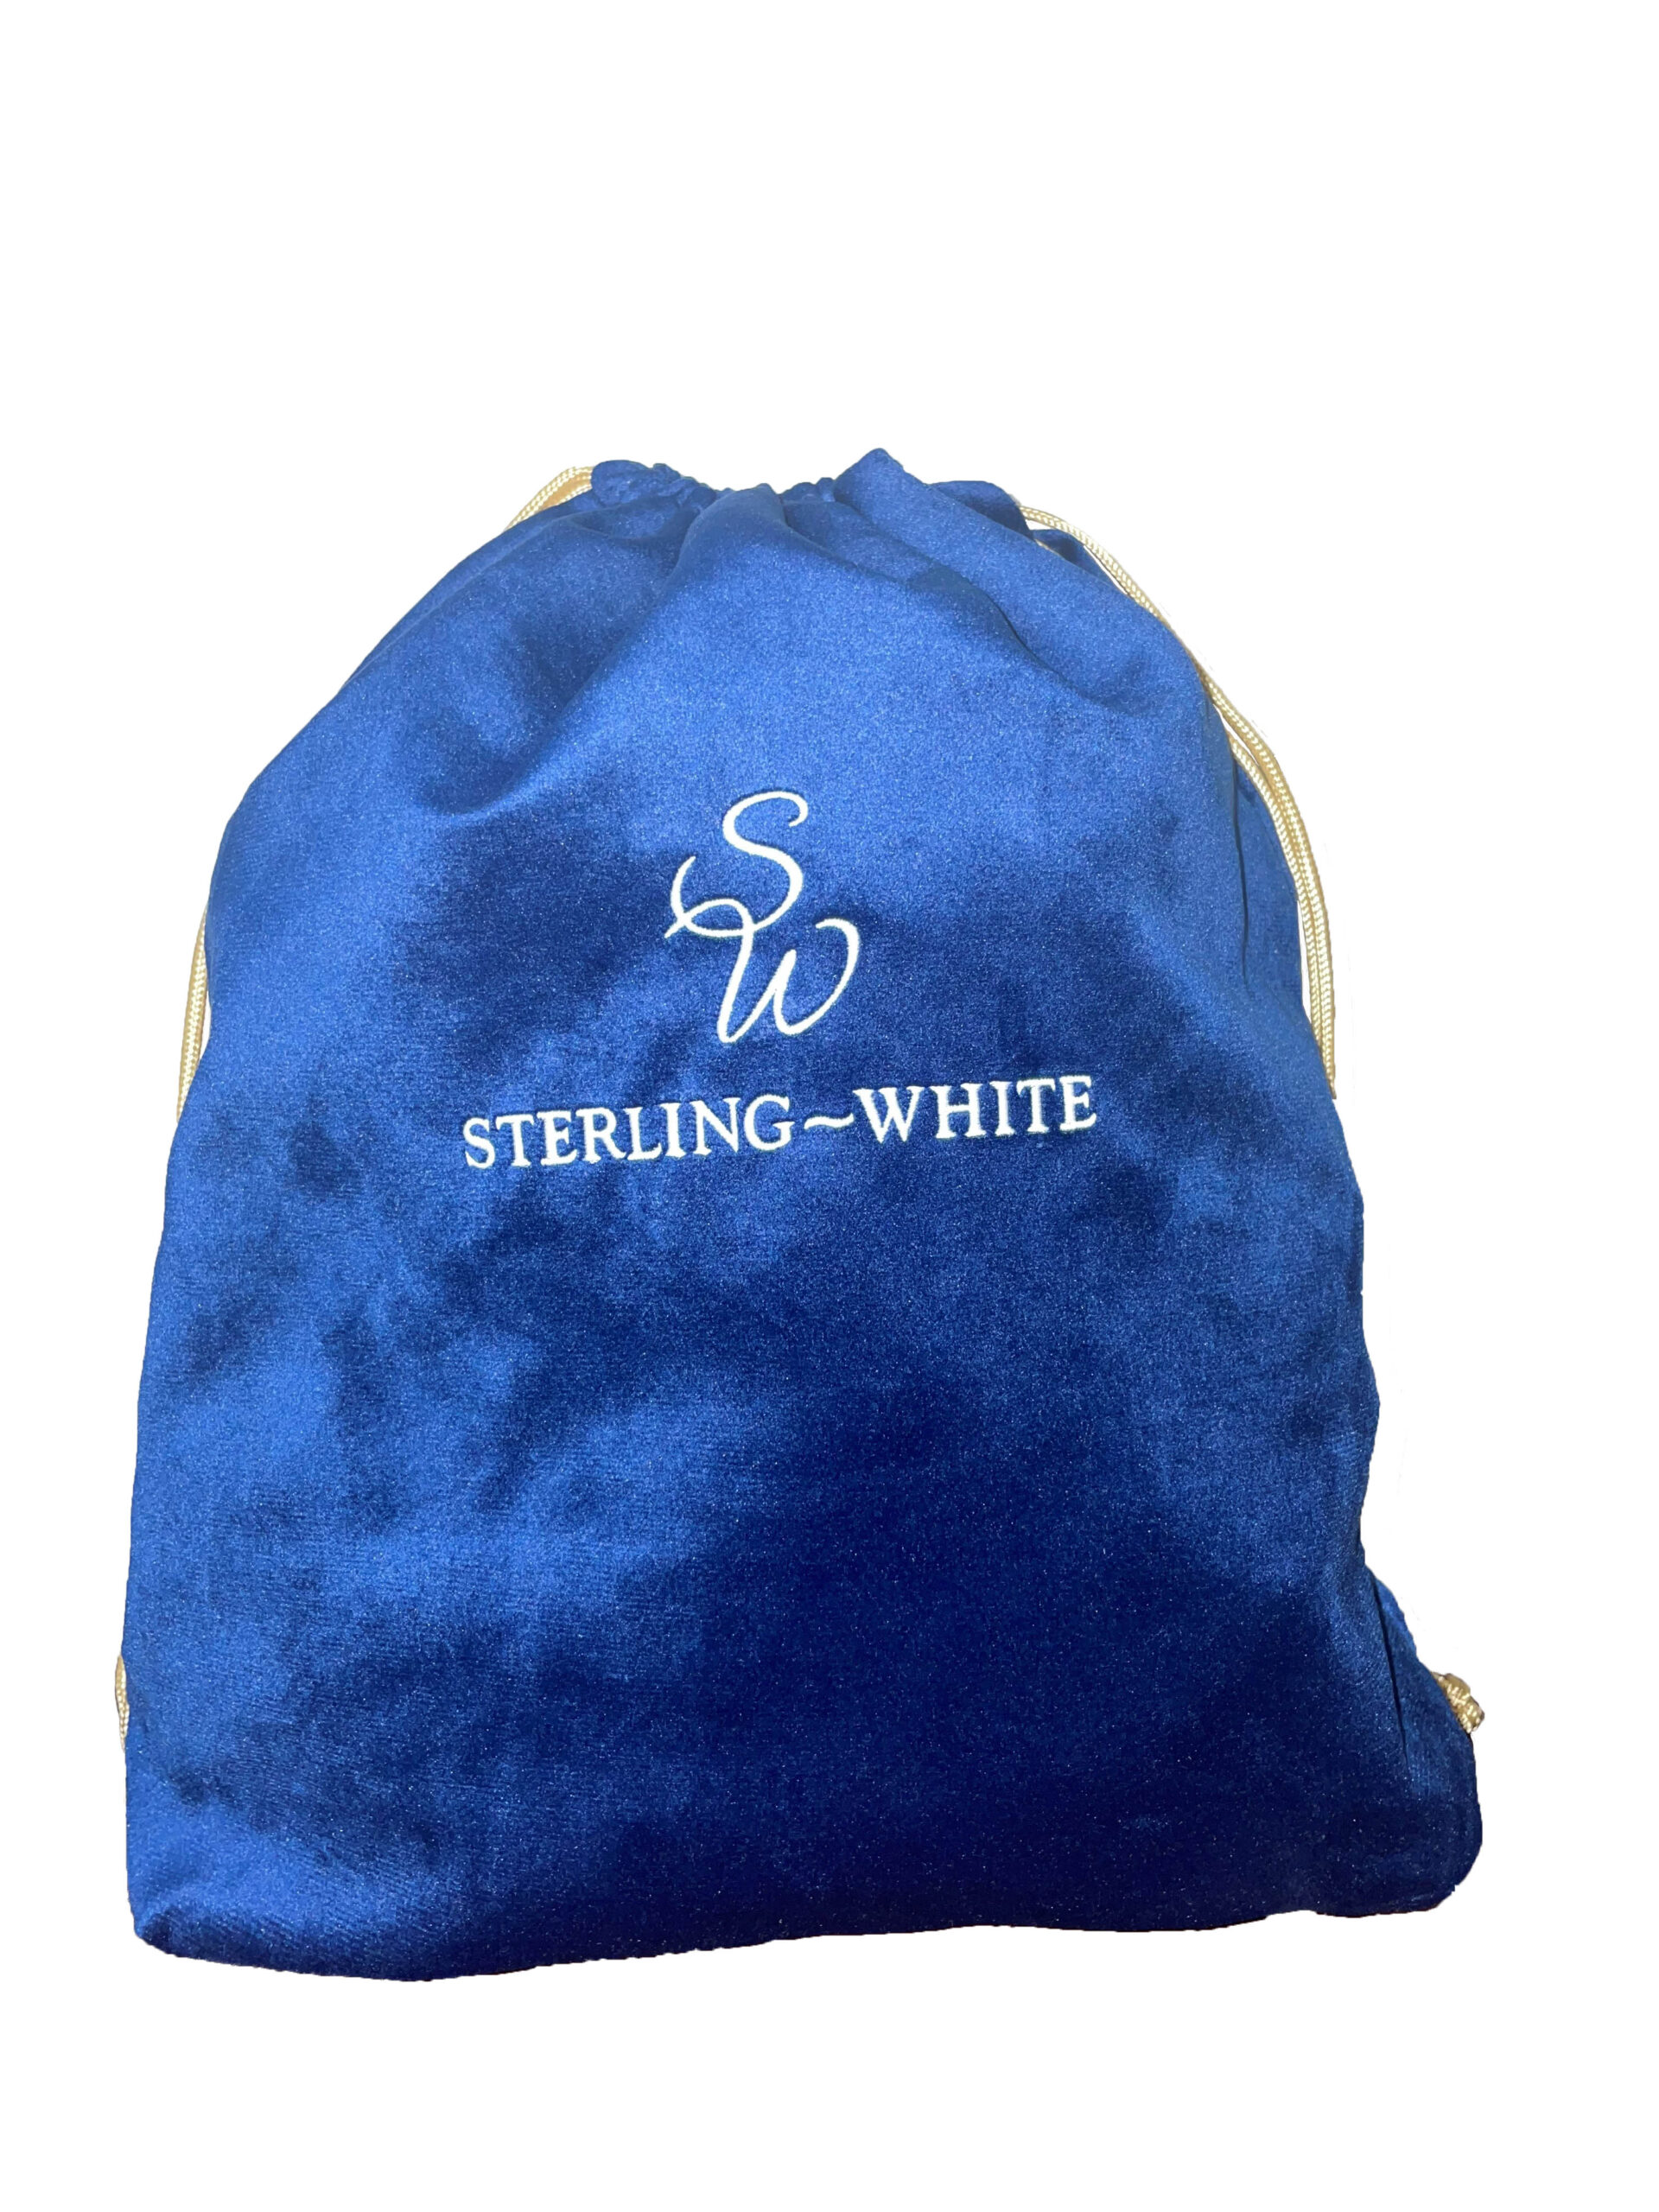 Sterling-White-Urn-Bag-scaled-1.jpg